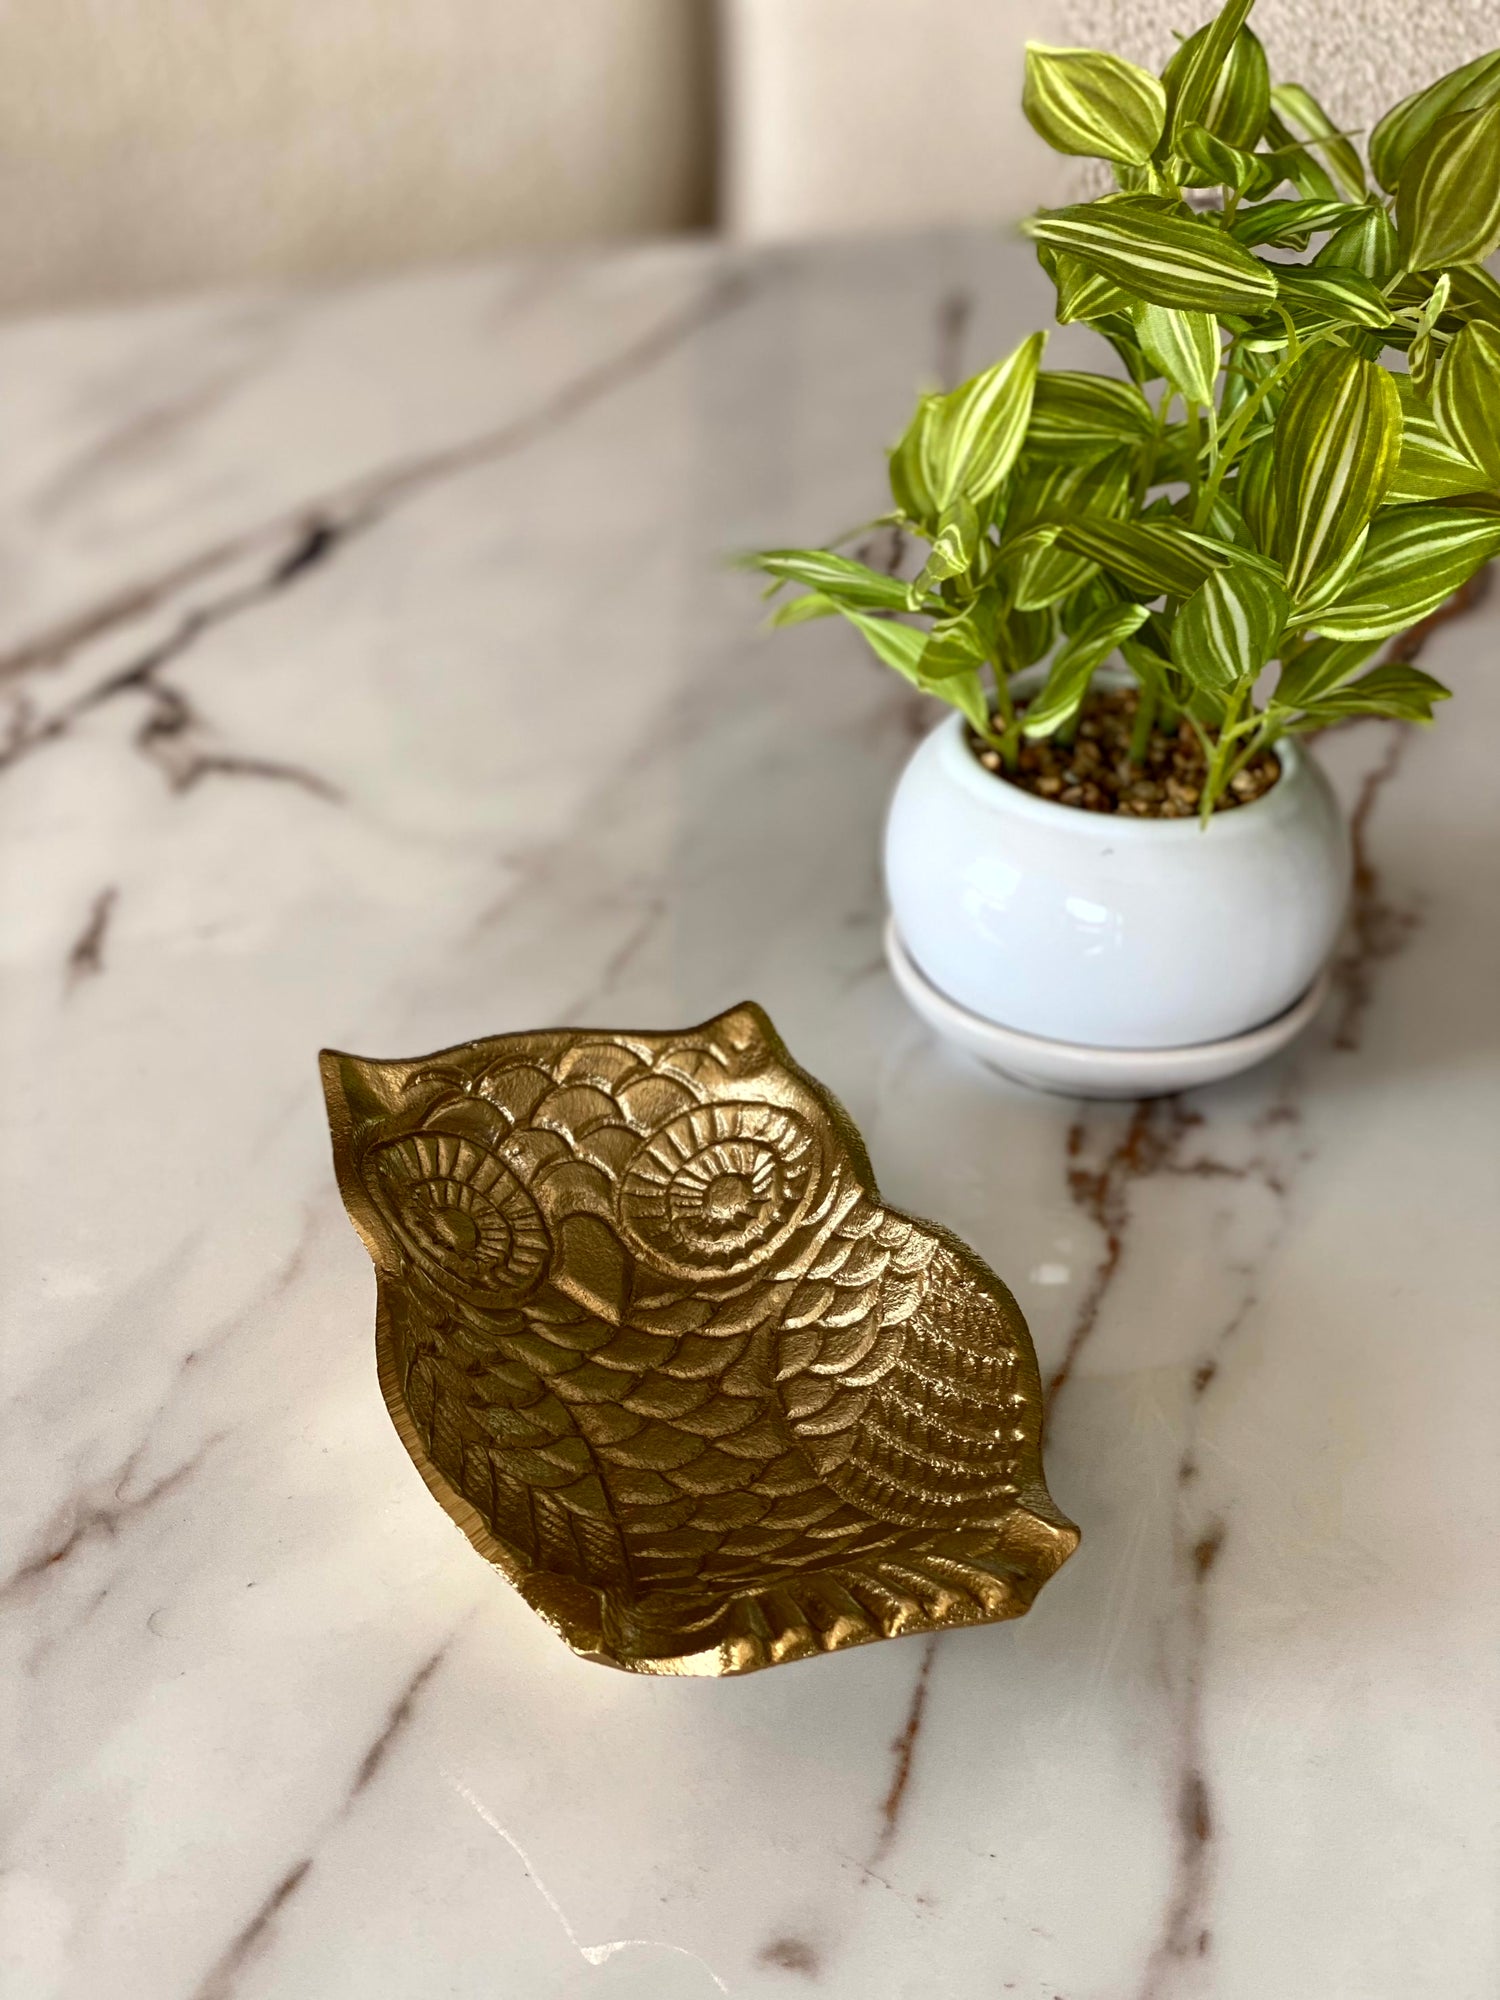 Luxe Owl Trinket Tray